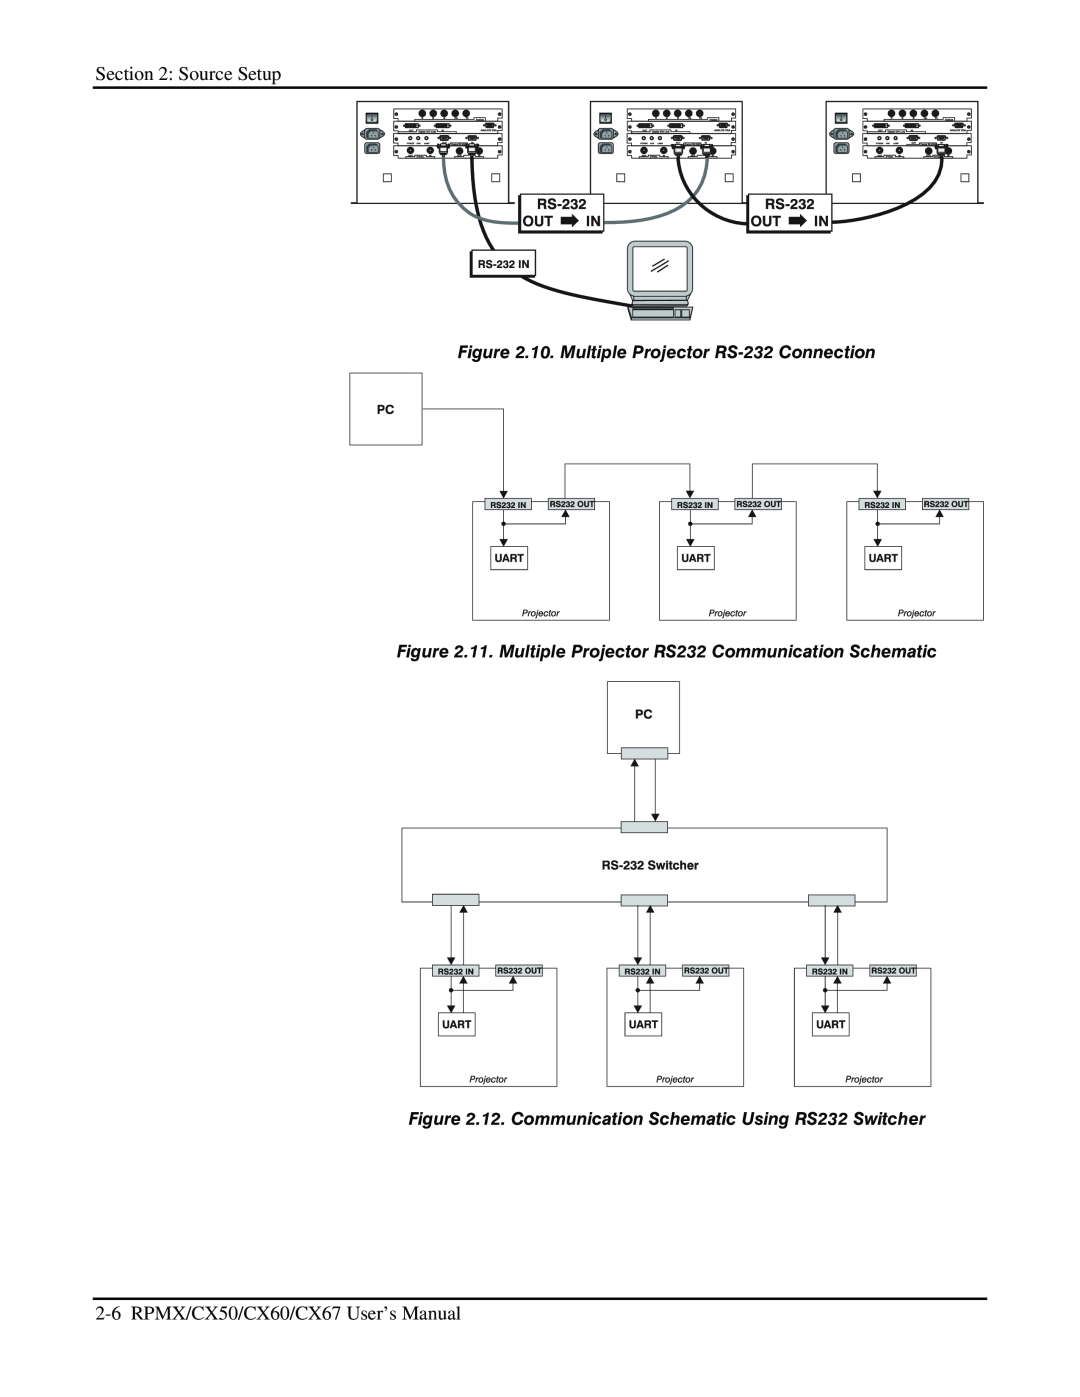 Christie Digital Systems Source Setup, RPMX/CX50/CX60/CX67 User’s Manual, 10. Multiple Projector RS-232 Connection 